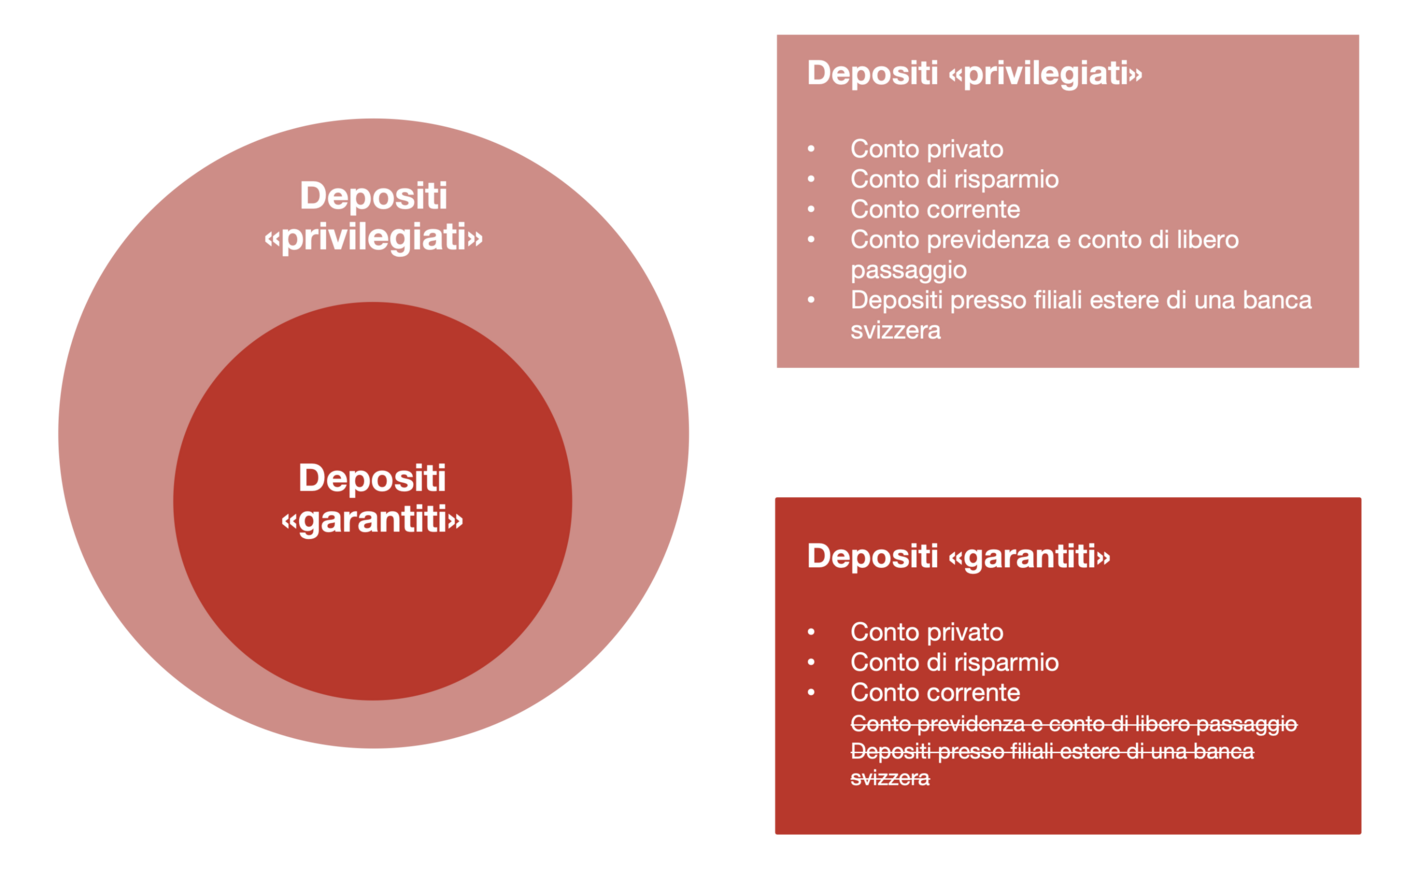 Qual è la differenza fra depositi «privilegiati» e depositi «garantiti»?